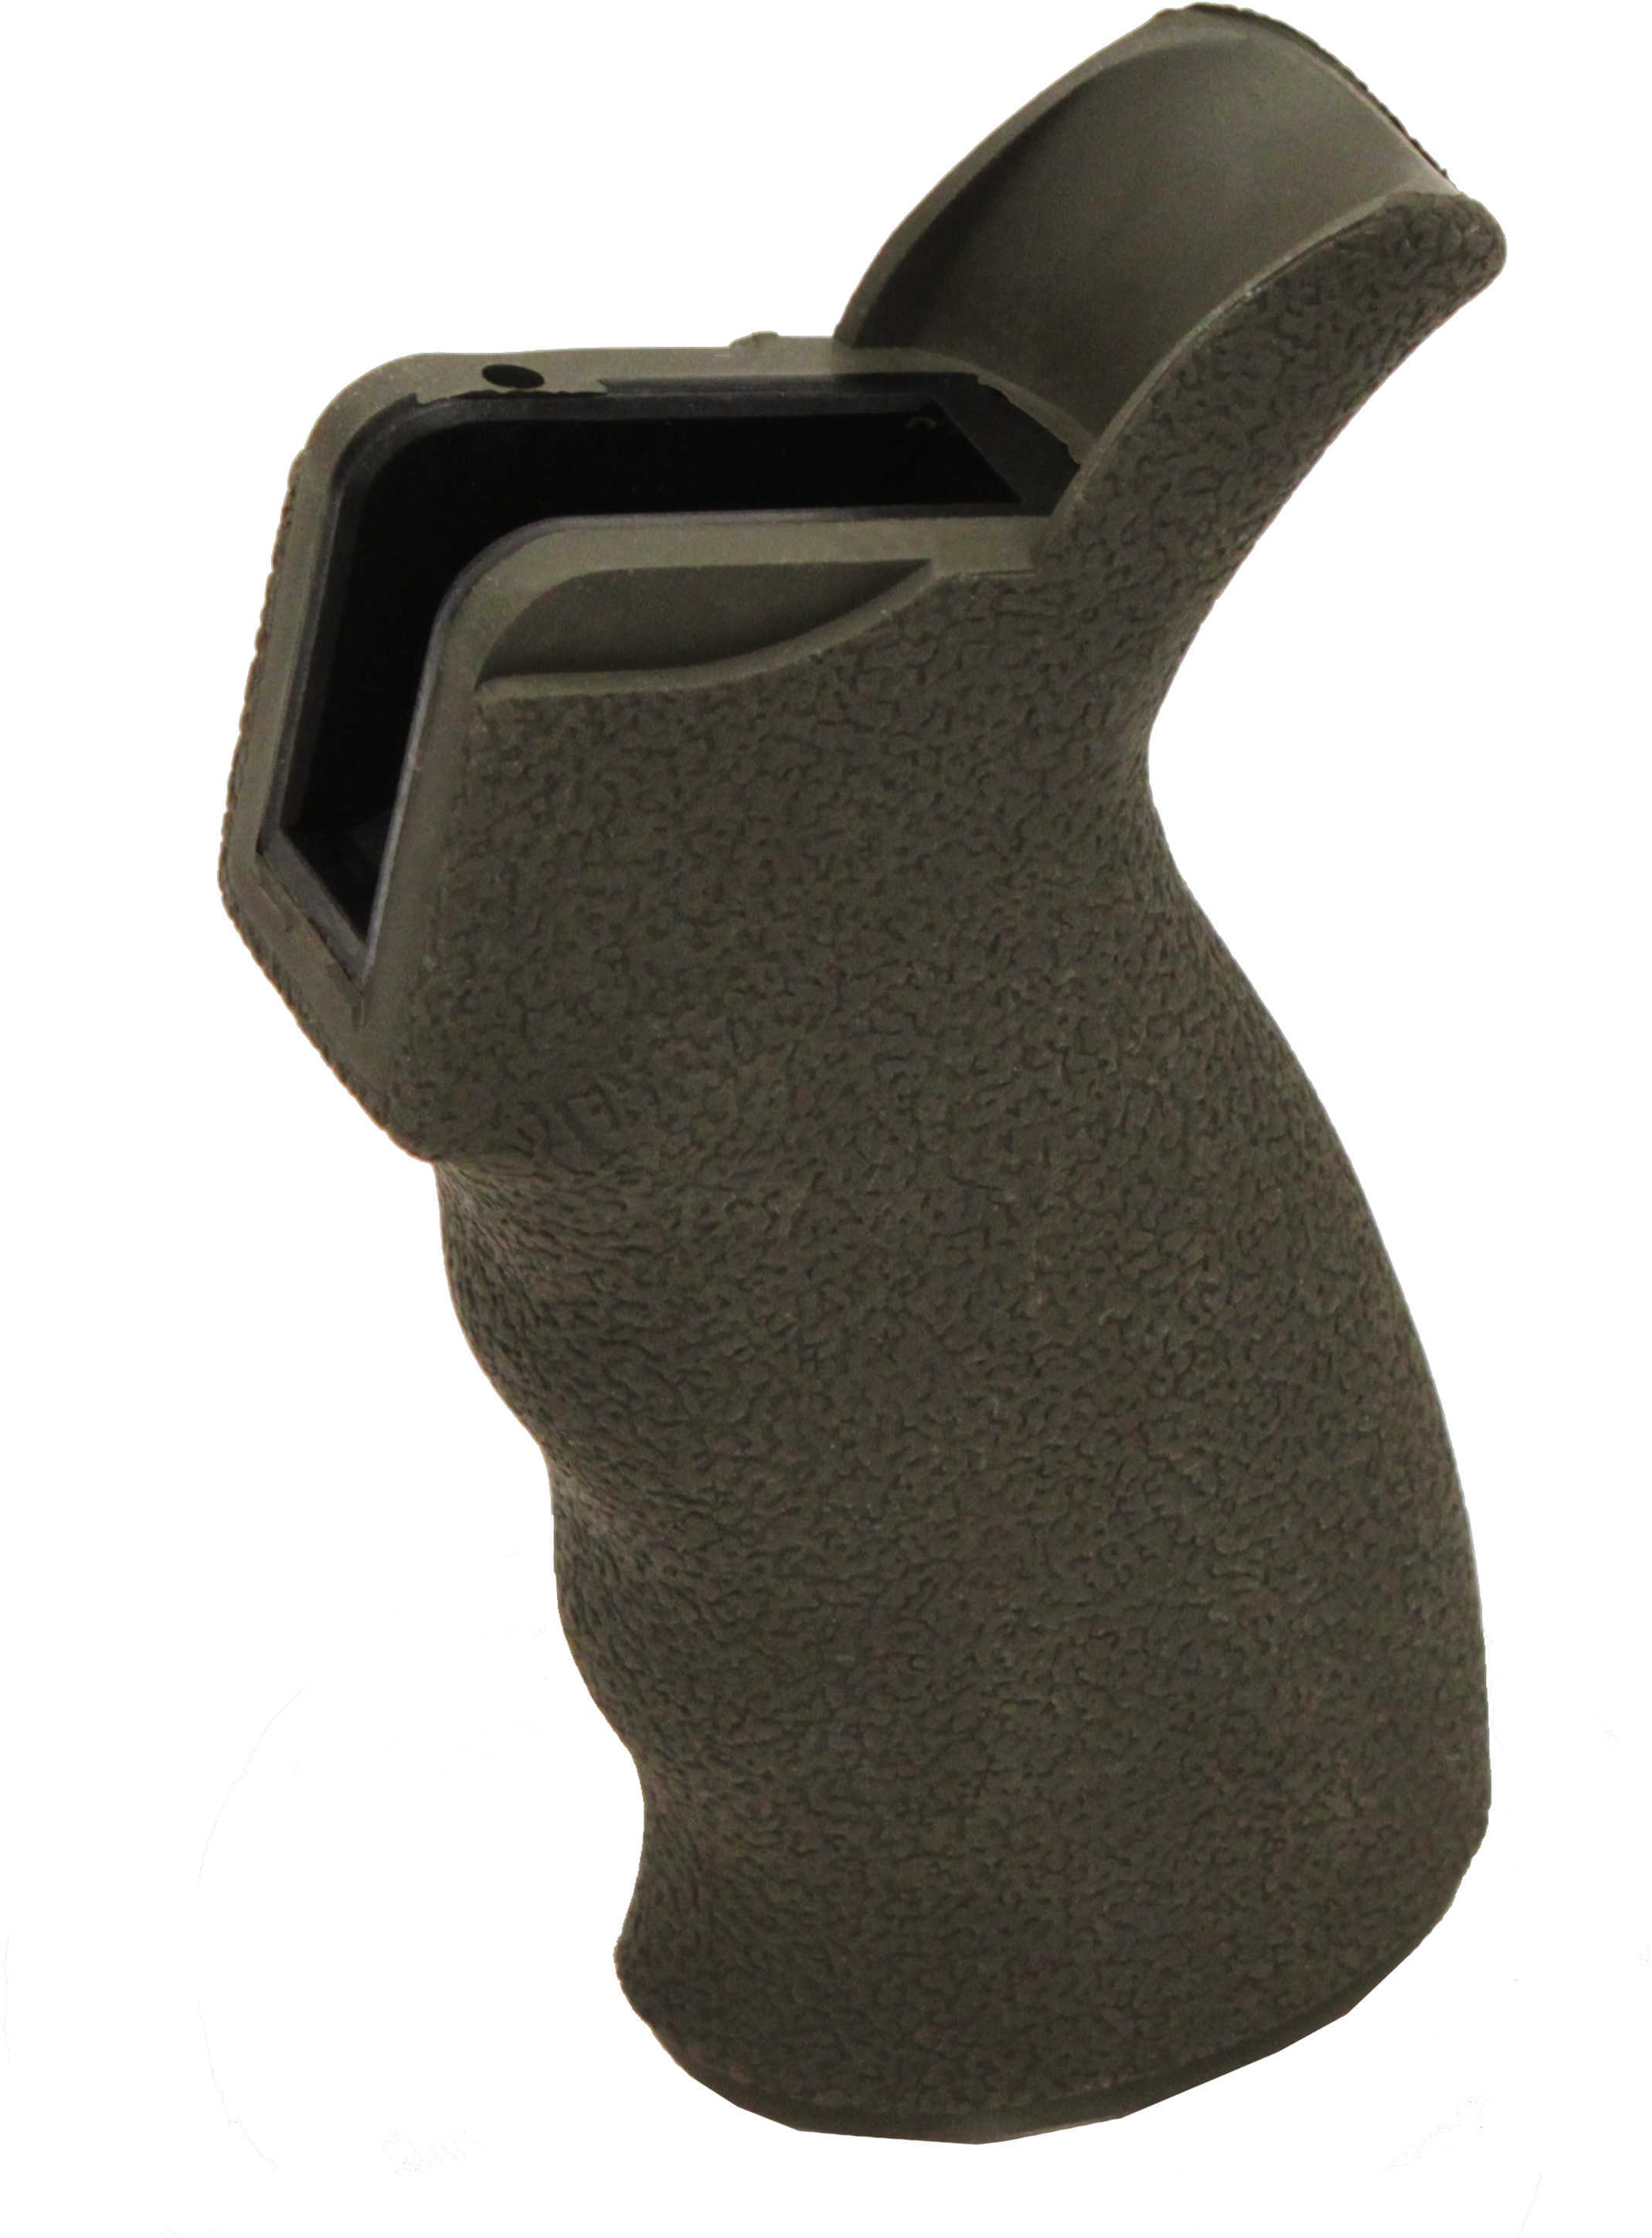 Ergo Grip Fits AR-15/M16 SureGrip Aggressive Texture Rubber OD Green 4009-OD